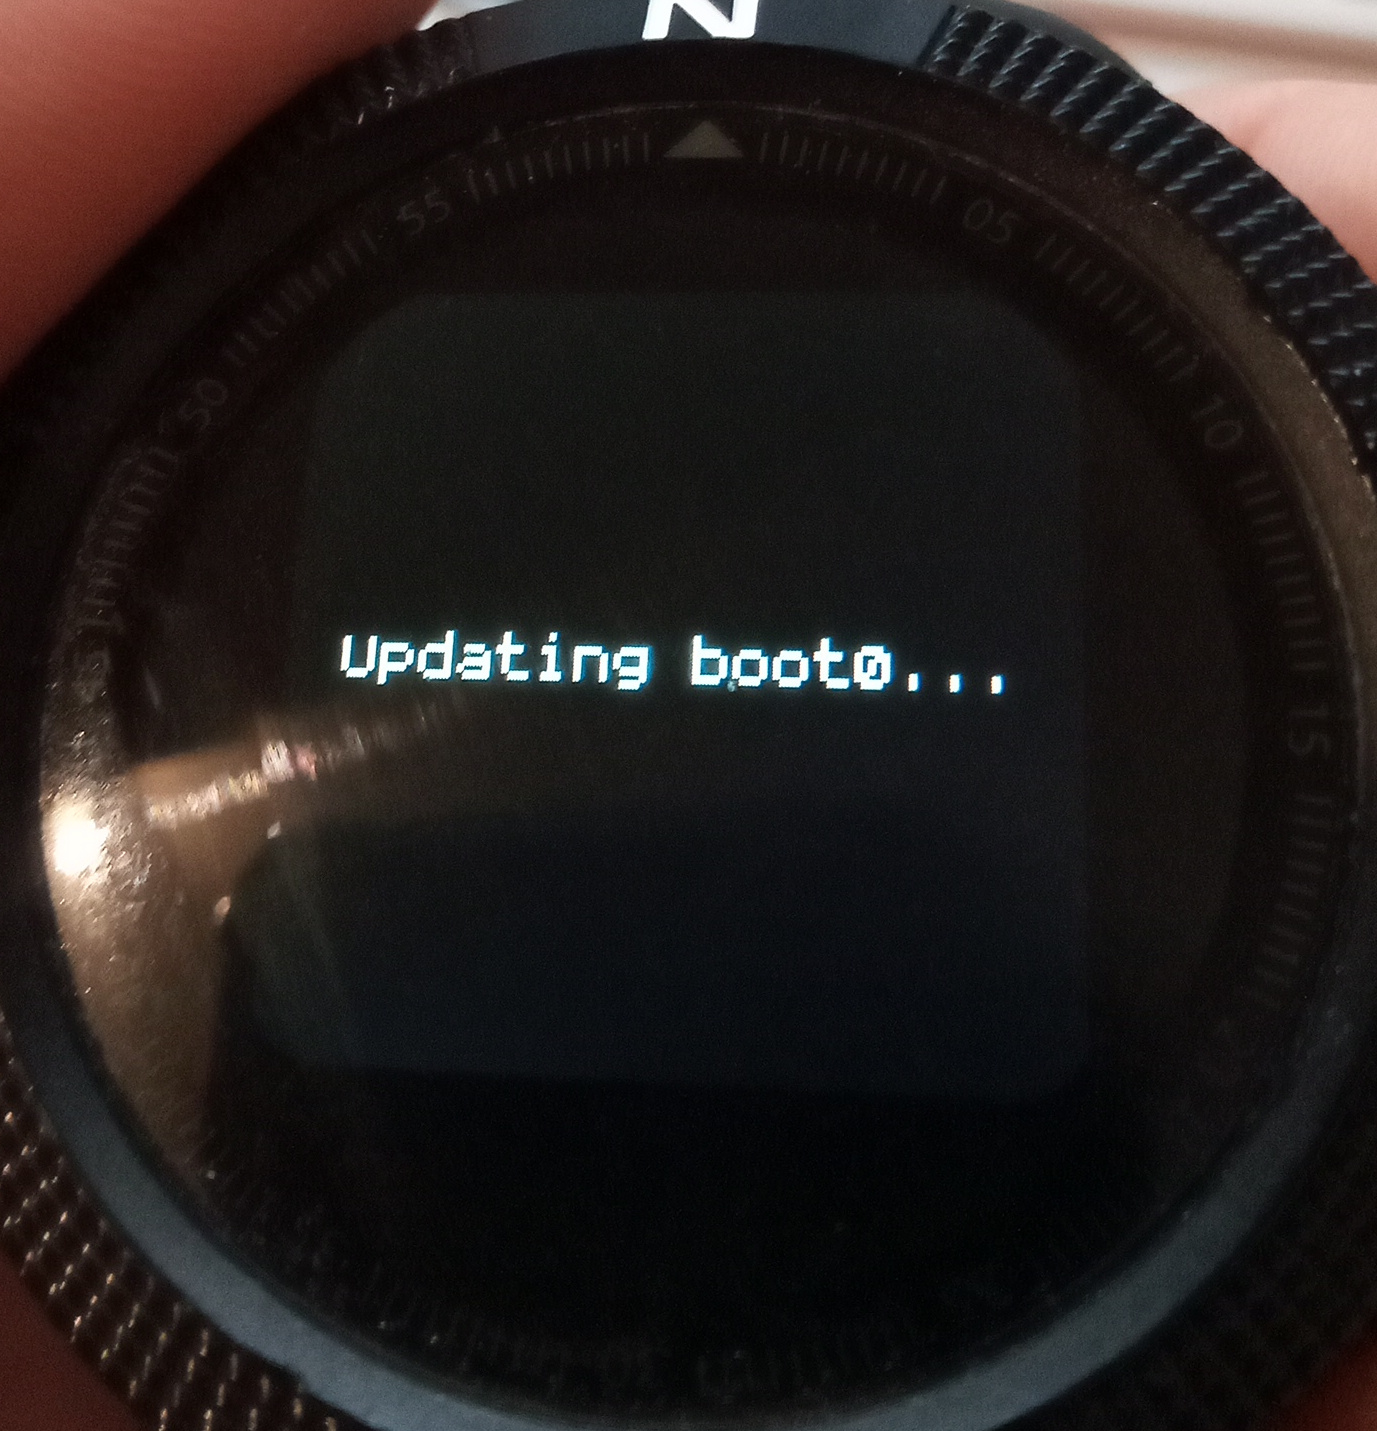 updateing_boot0.jpg